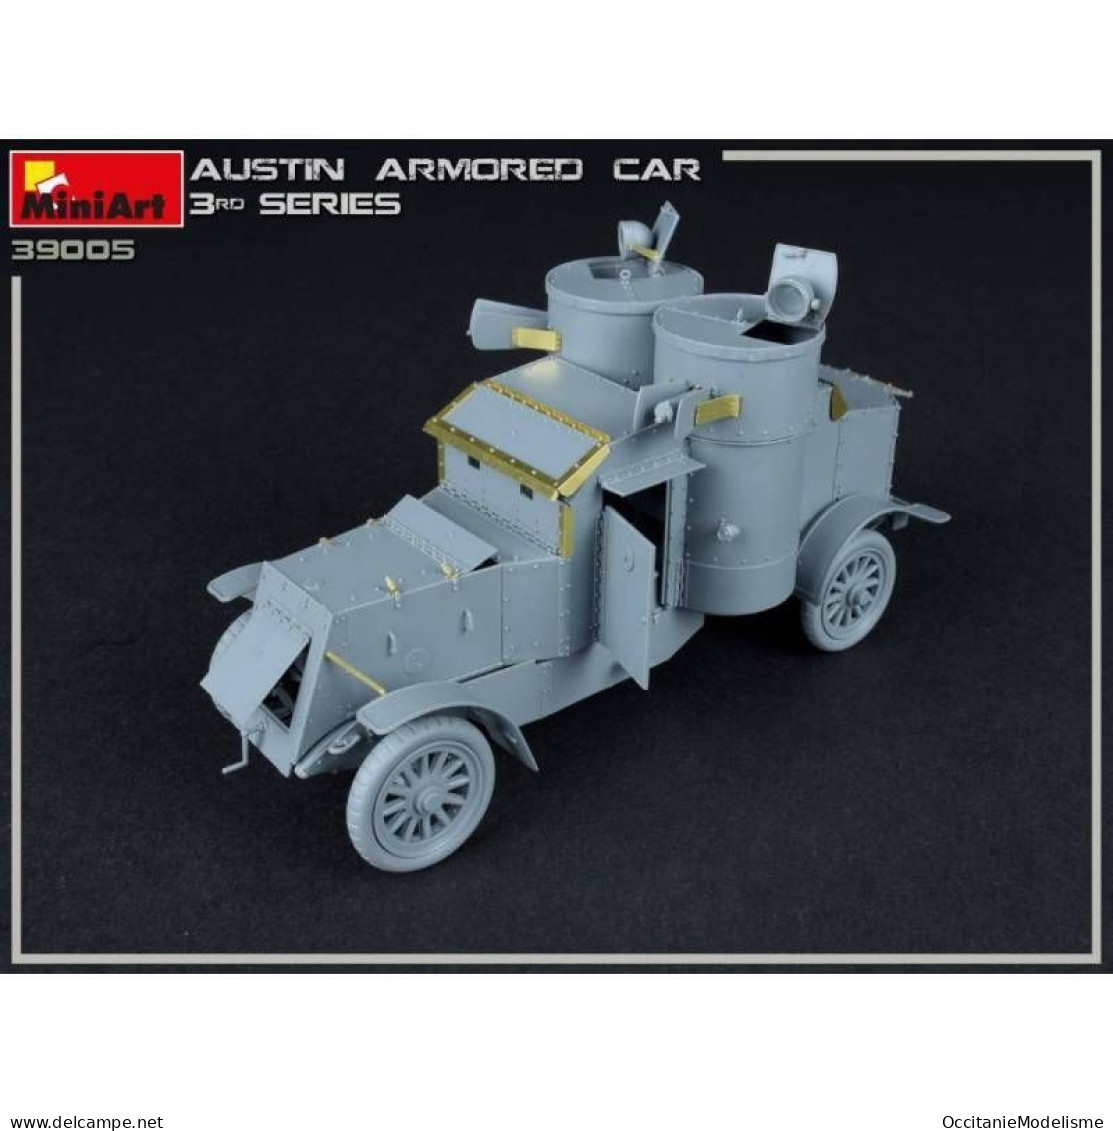 Miniart - AUSTIN ARMOURED CAR 3rd Series Maquette Kit Plastique Réf. 39005 Neuf NBO 1/35 - Militär